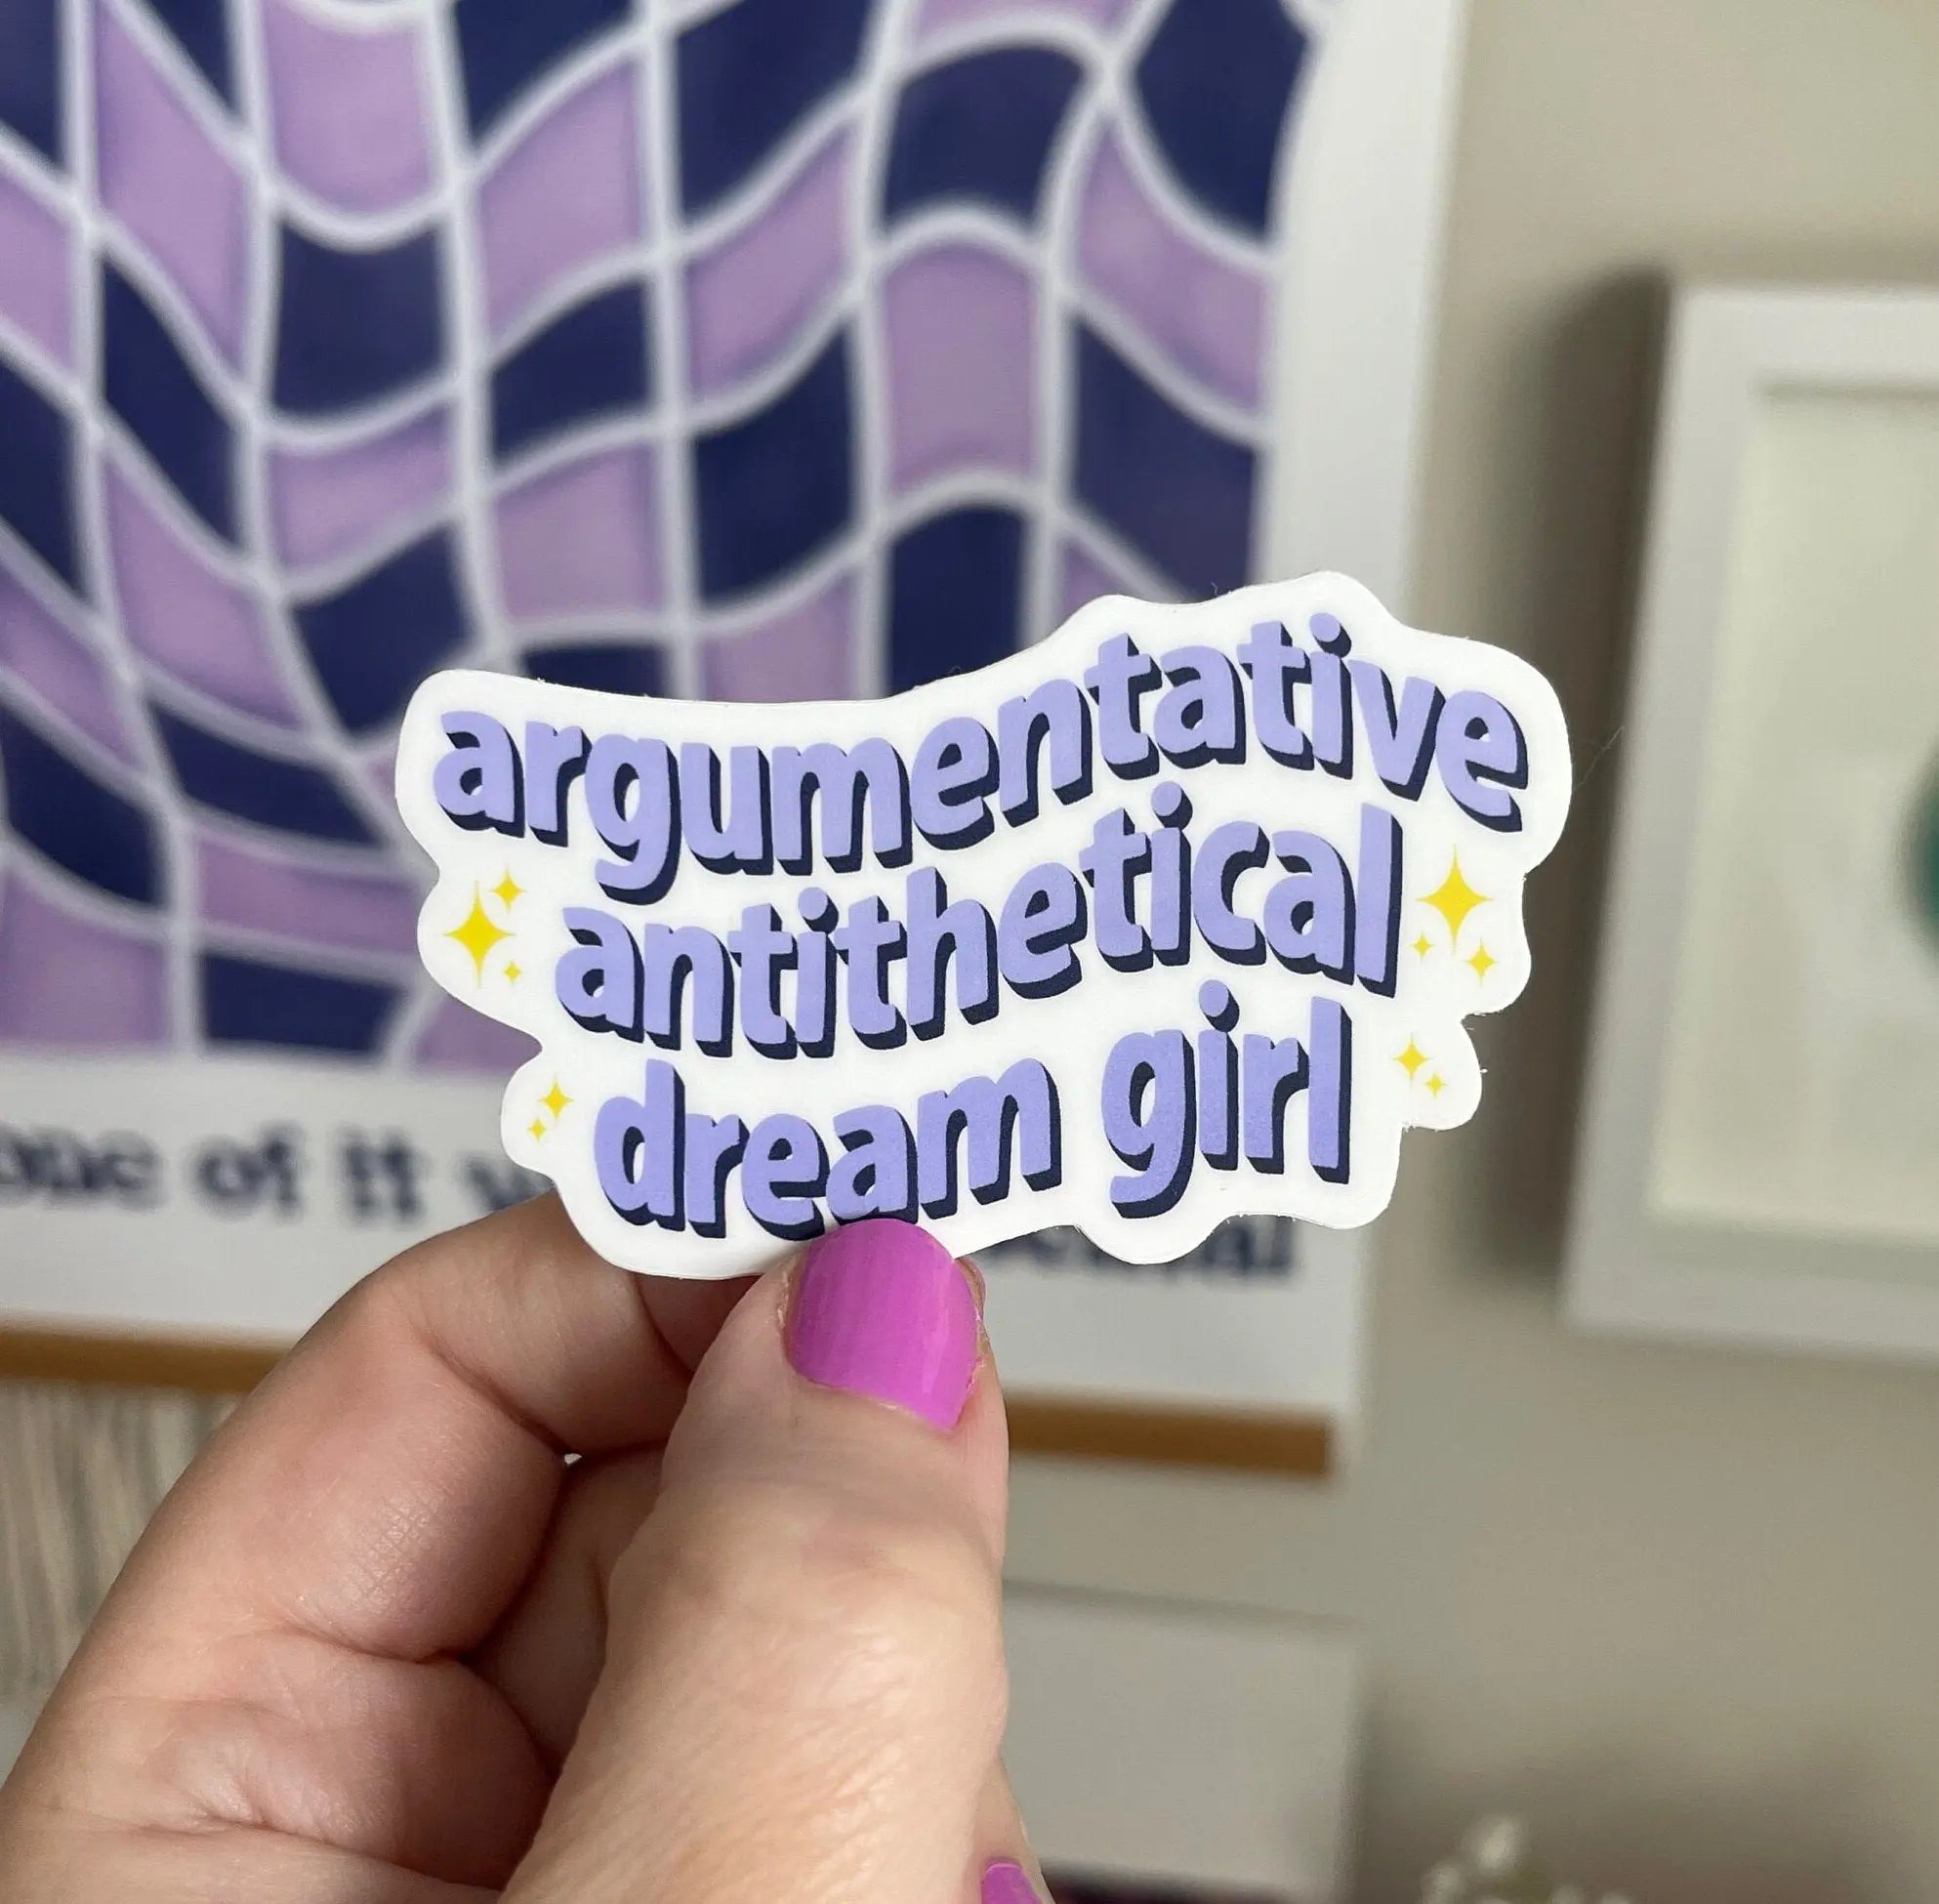 Argumentative Antithetical Dream Girl sticker MangoIllustrated